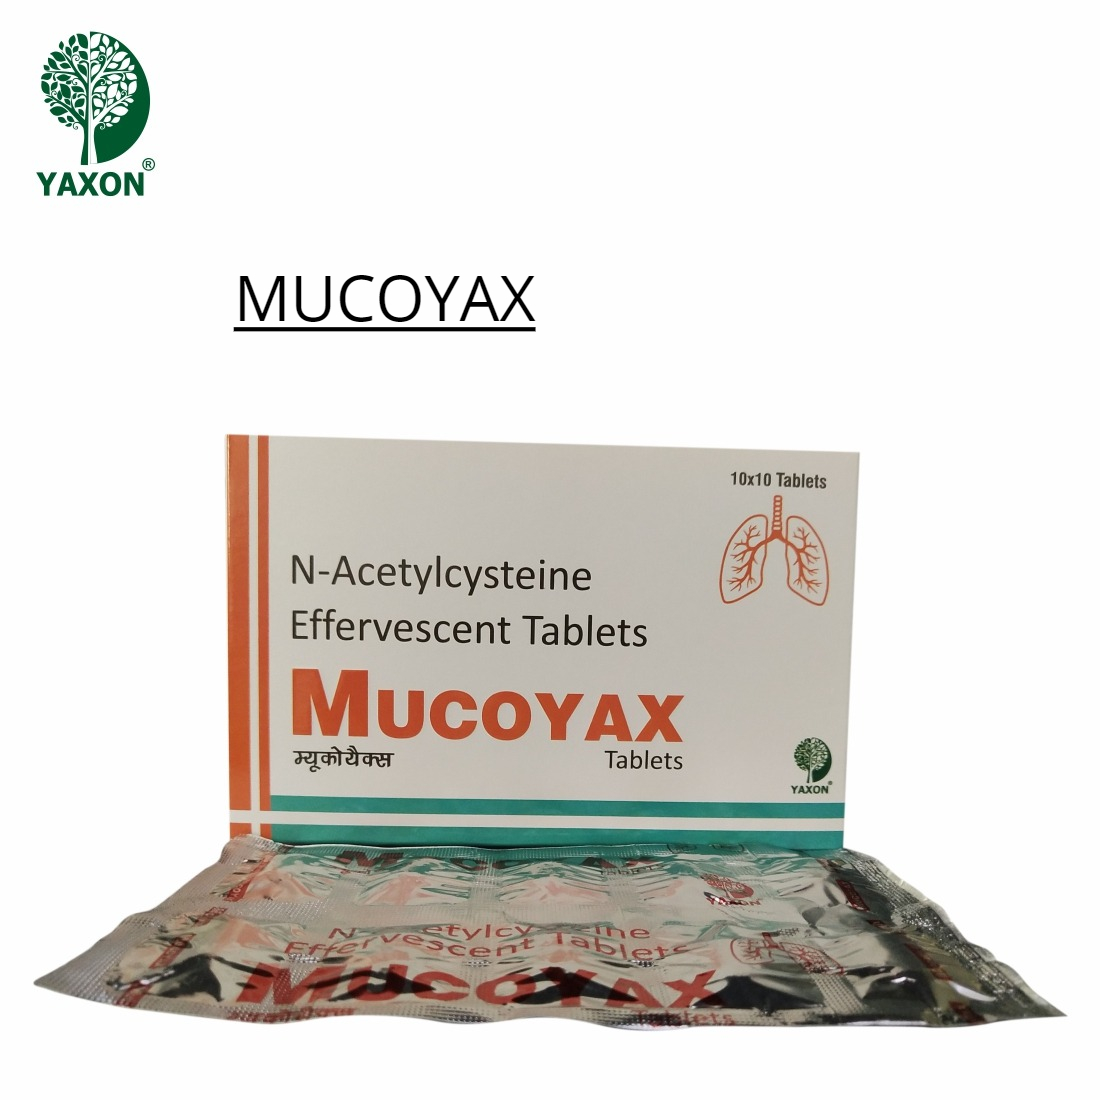 YAXON Mucoyax Effervescent Tablets